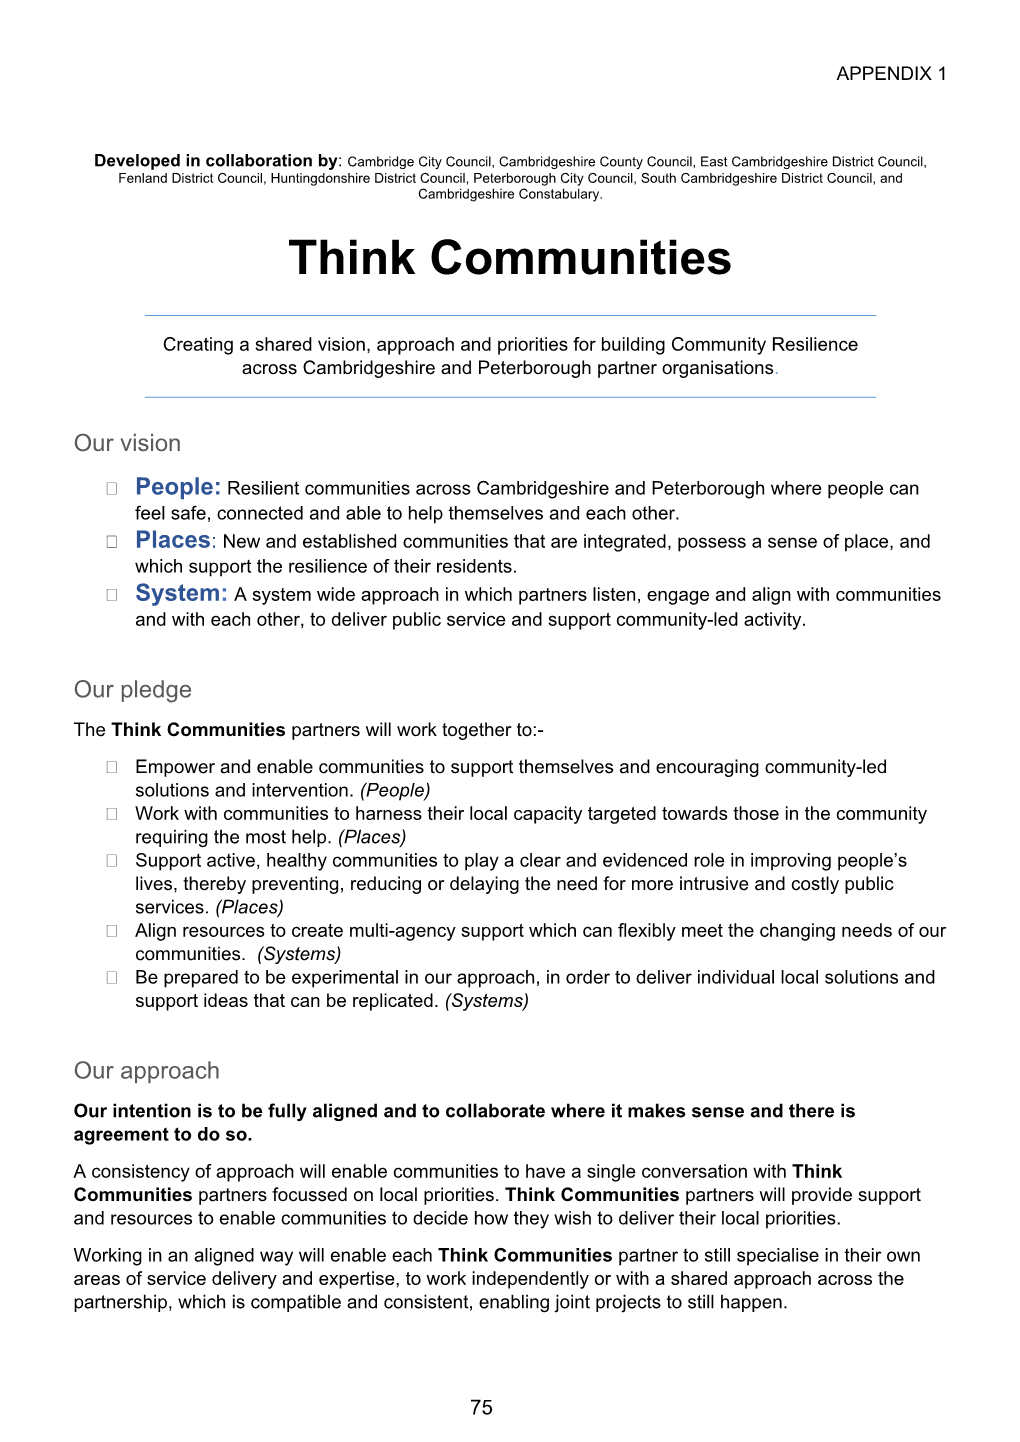 Think Communities